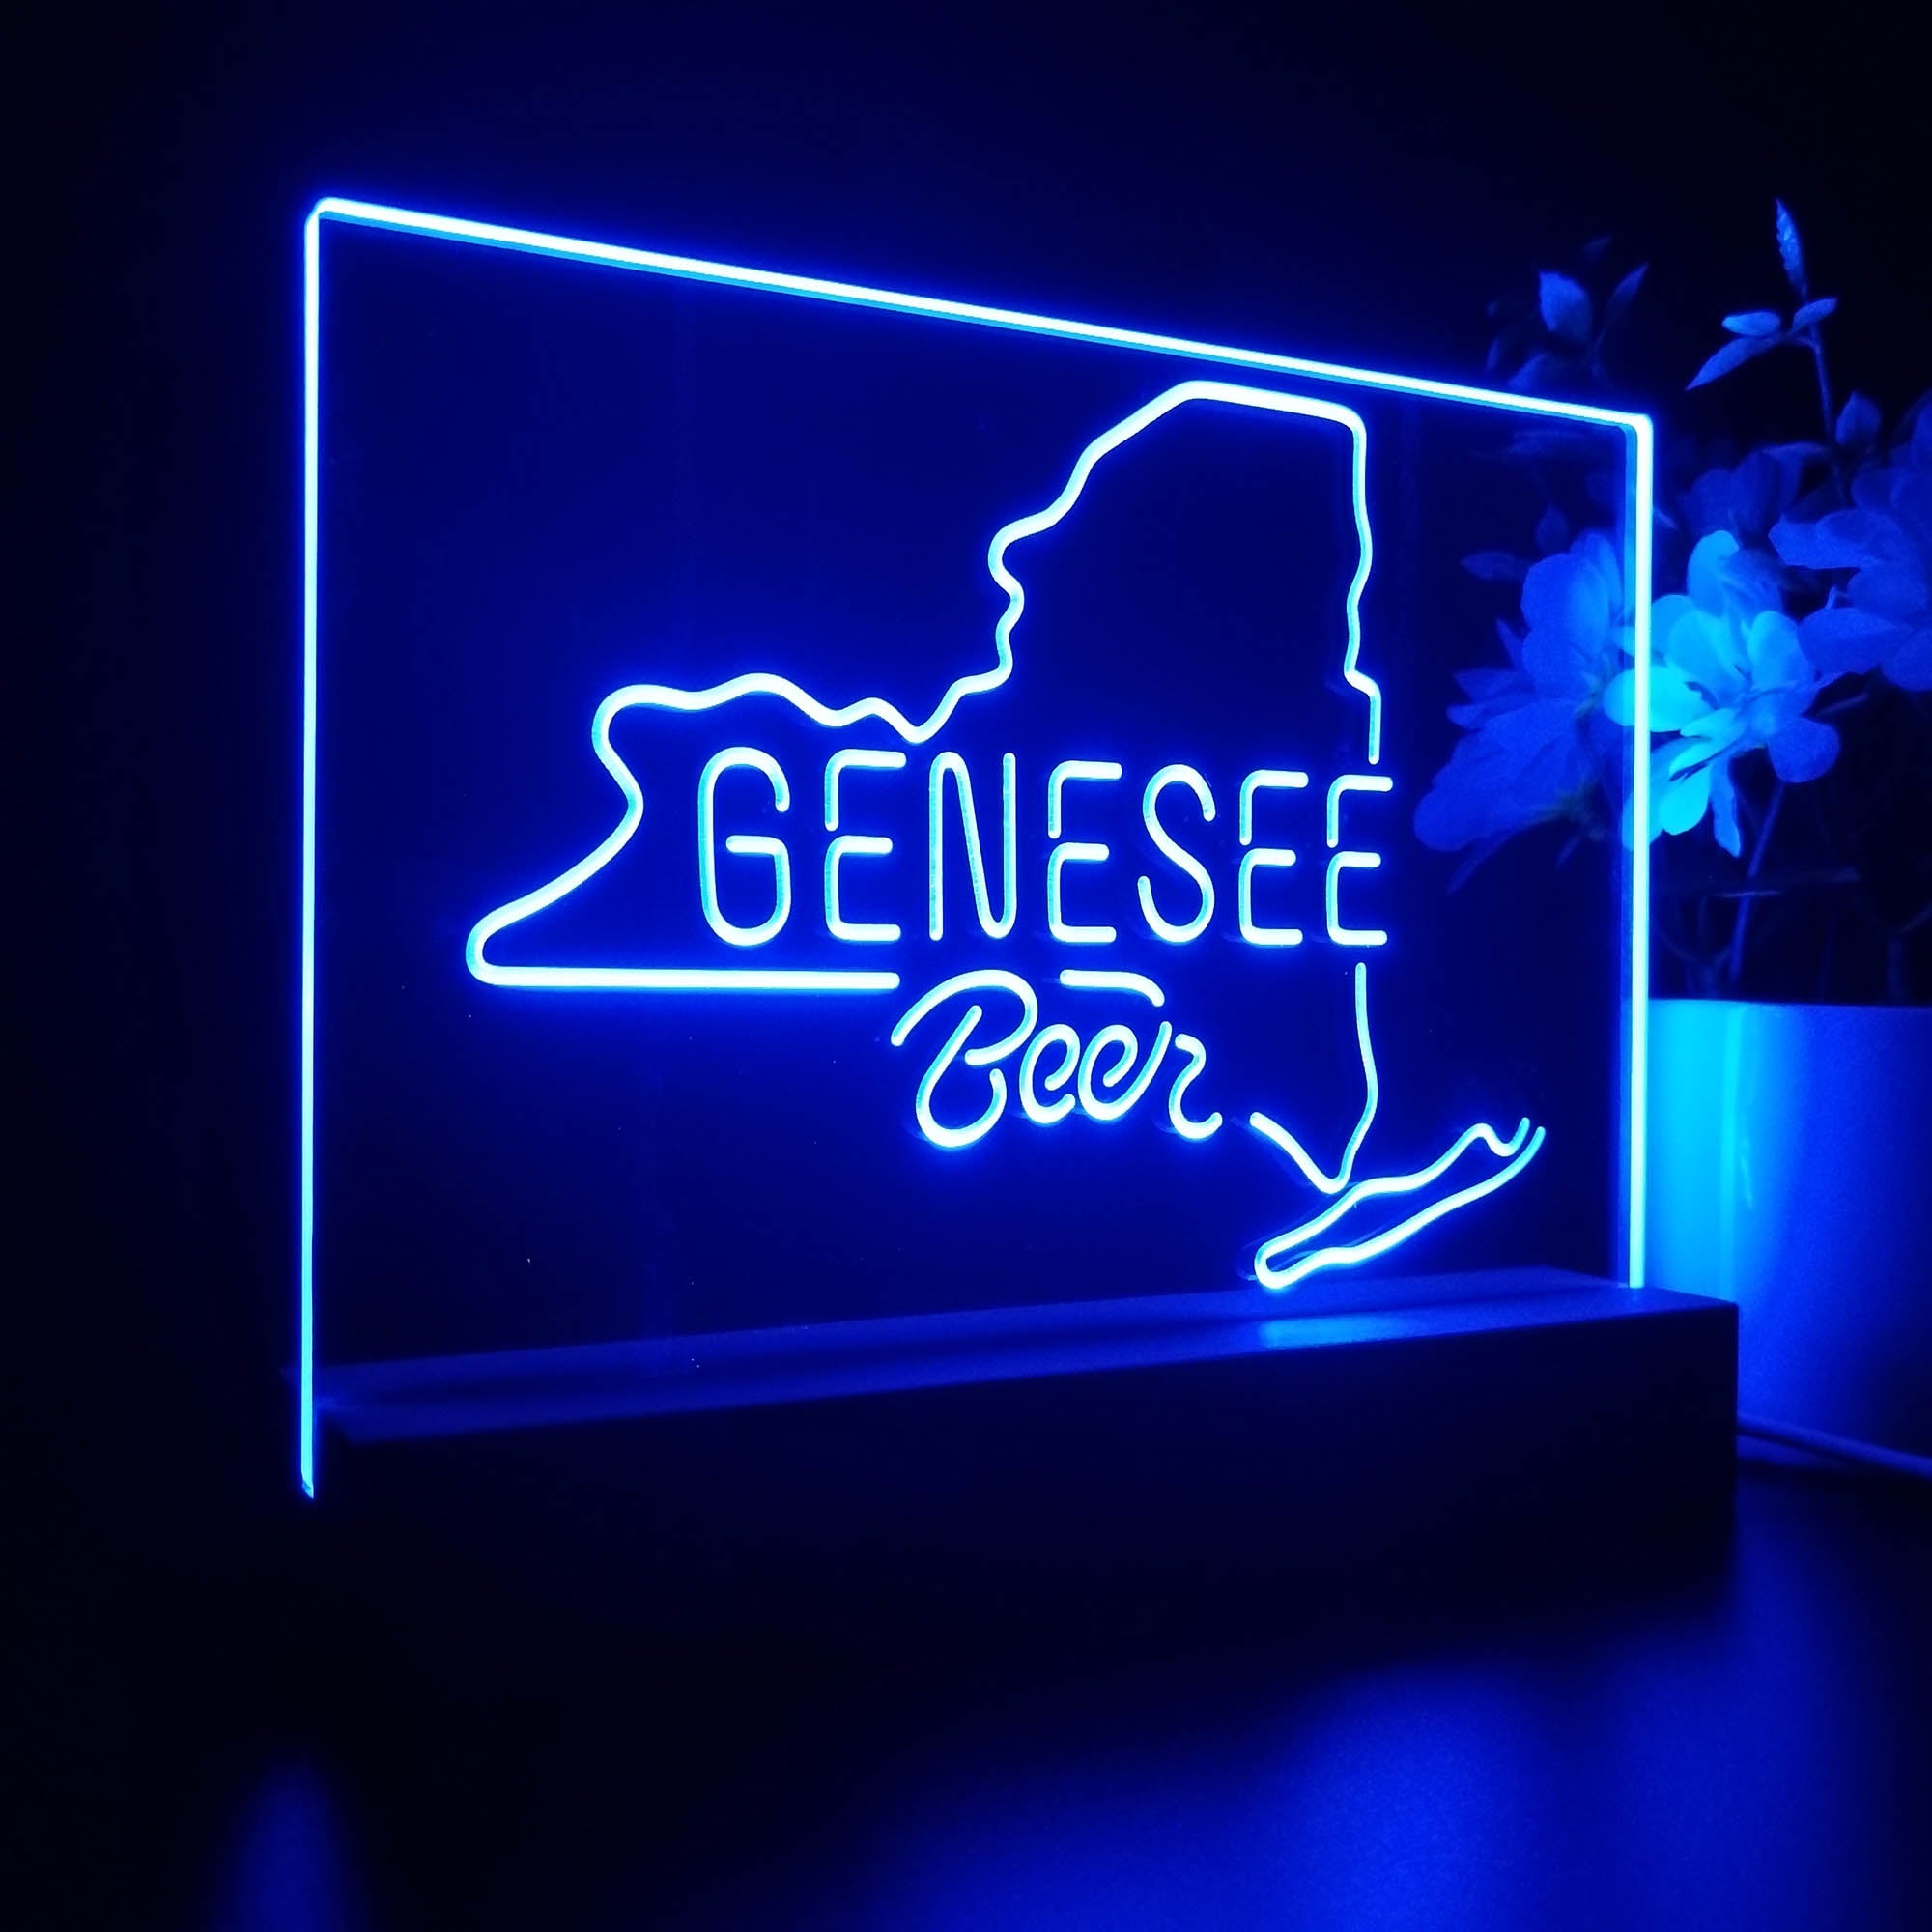 Genesee Beer Bar Night Light 3D Illusion Lamp Home Bar Decor